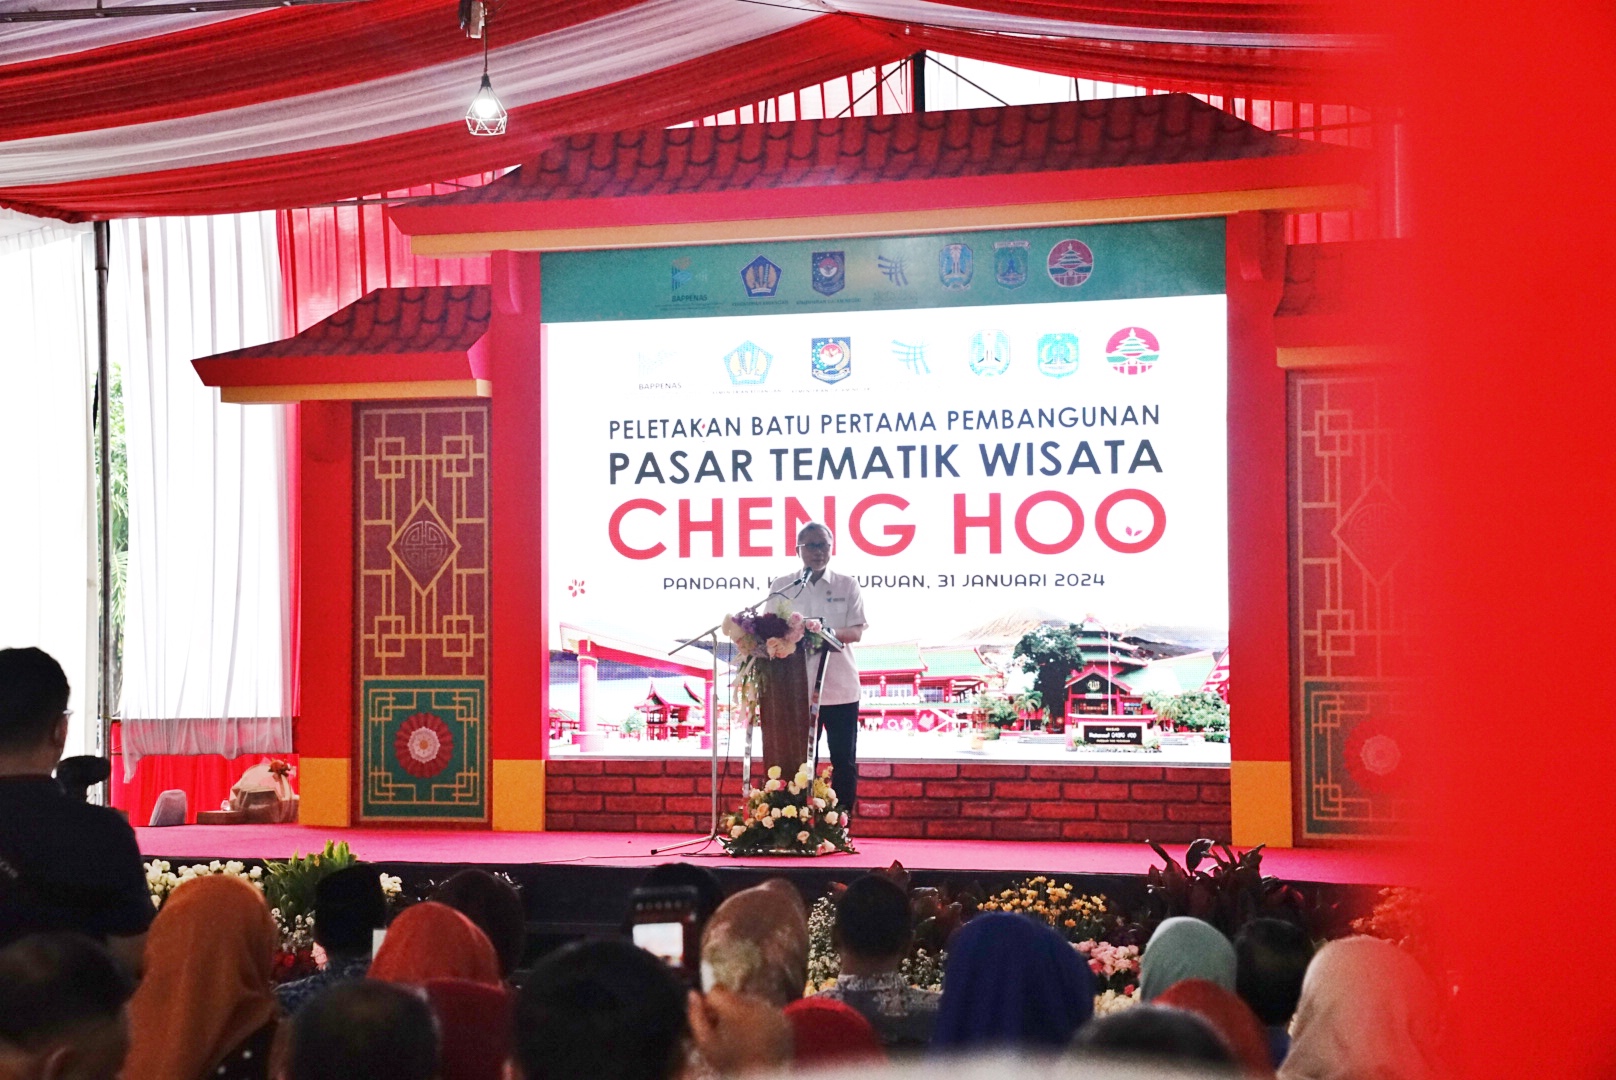 Pembangunan Pasar Tematik Wisata Cheng Hoo menggunakan Dana Alokasi Khusus (DAK) dengan anggaran sebesar Rp60 miliar. Pasar yang didesain dengan mengakomodasi budaya Tionghoa ini direncanakan dapat menampung sebanyak 330 pedagang.